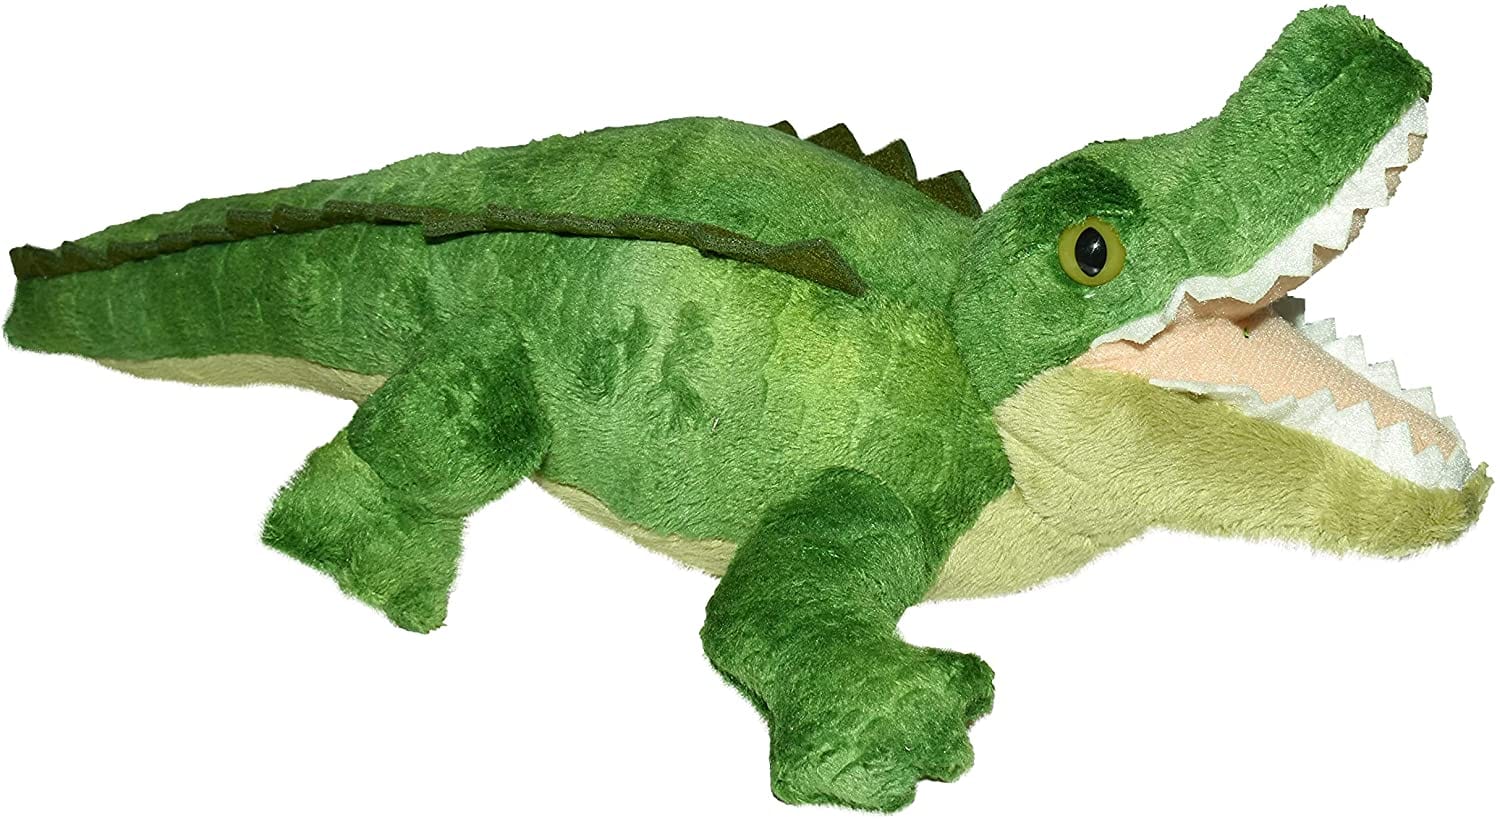 Mini Alligator Baby Stuffed Animal - Wild Republic